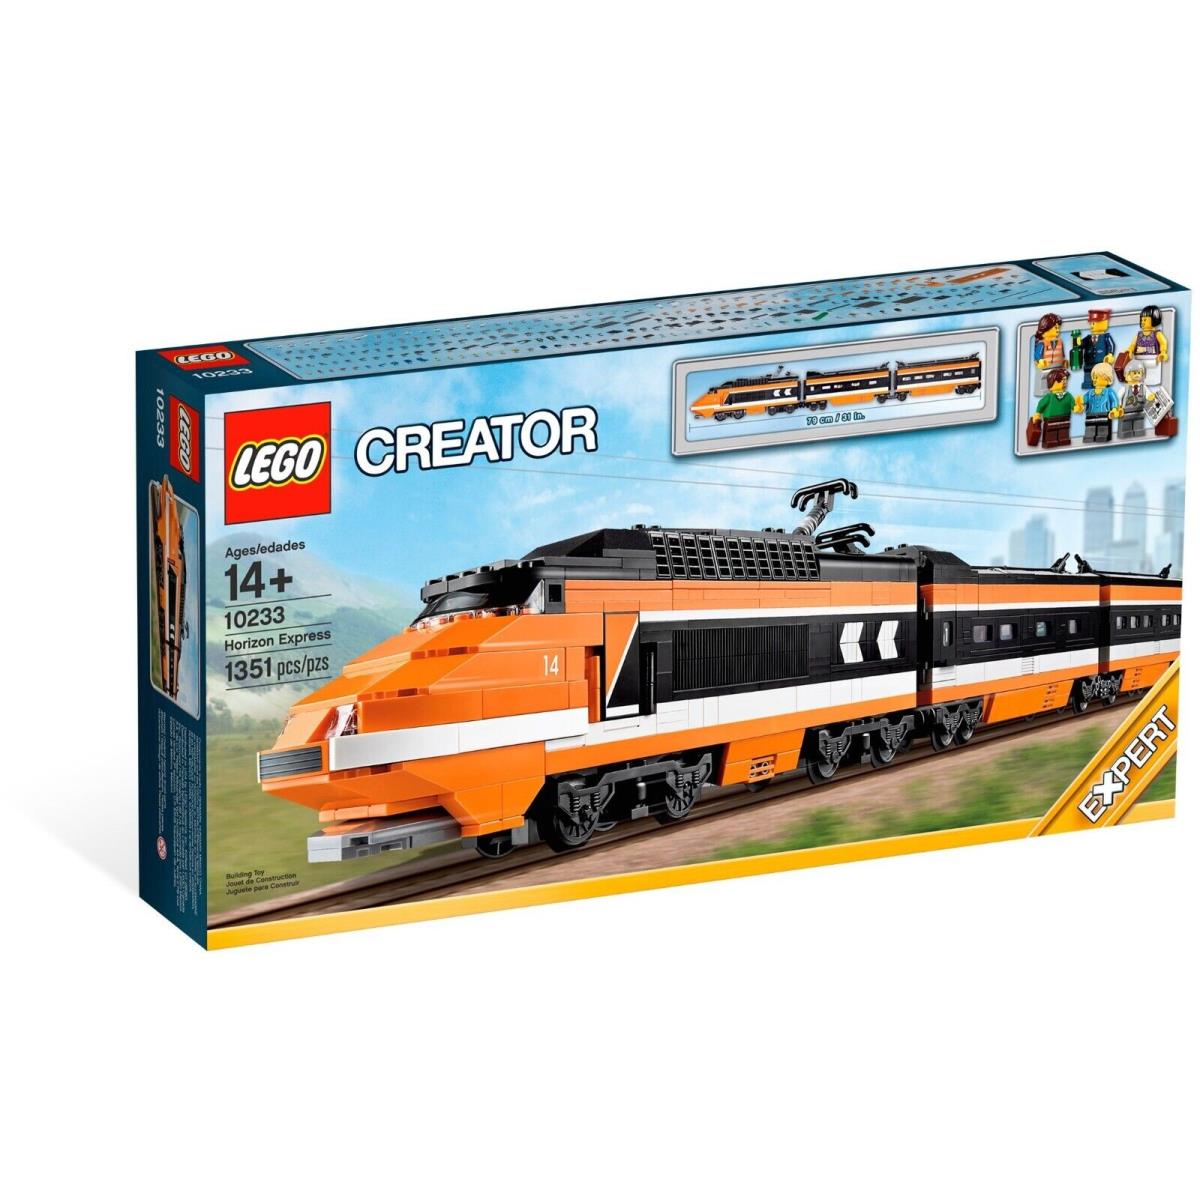 Lego Creator 10233 Horizon Express Train Retired Building Play Set